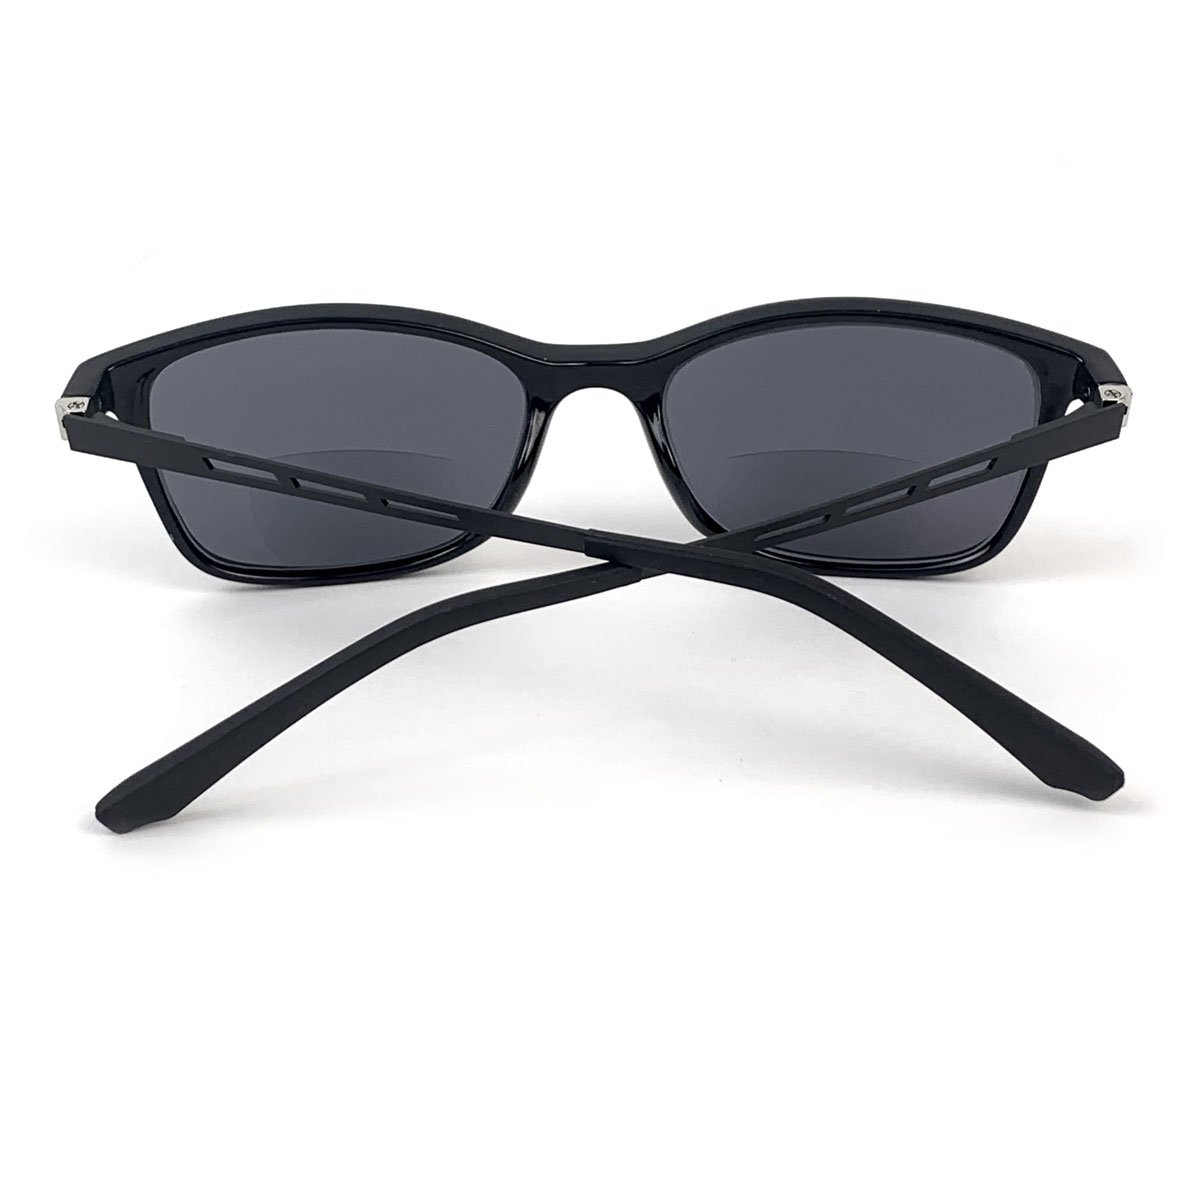 Bifocal Sun Readers Classic Frame Geek Retro Style Reading Sunglasses - Black, +2.00